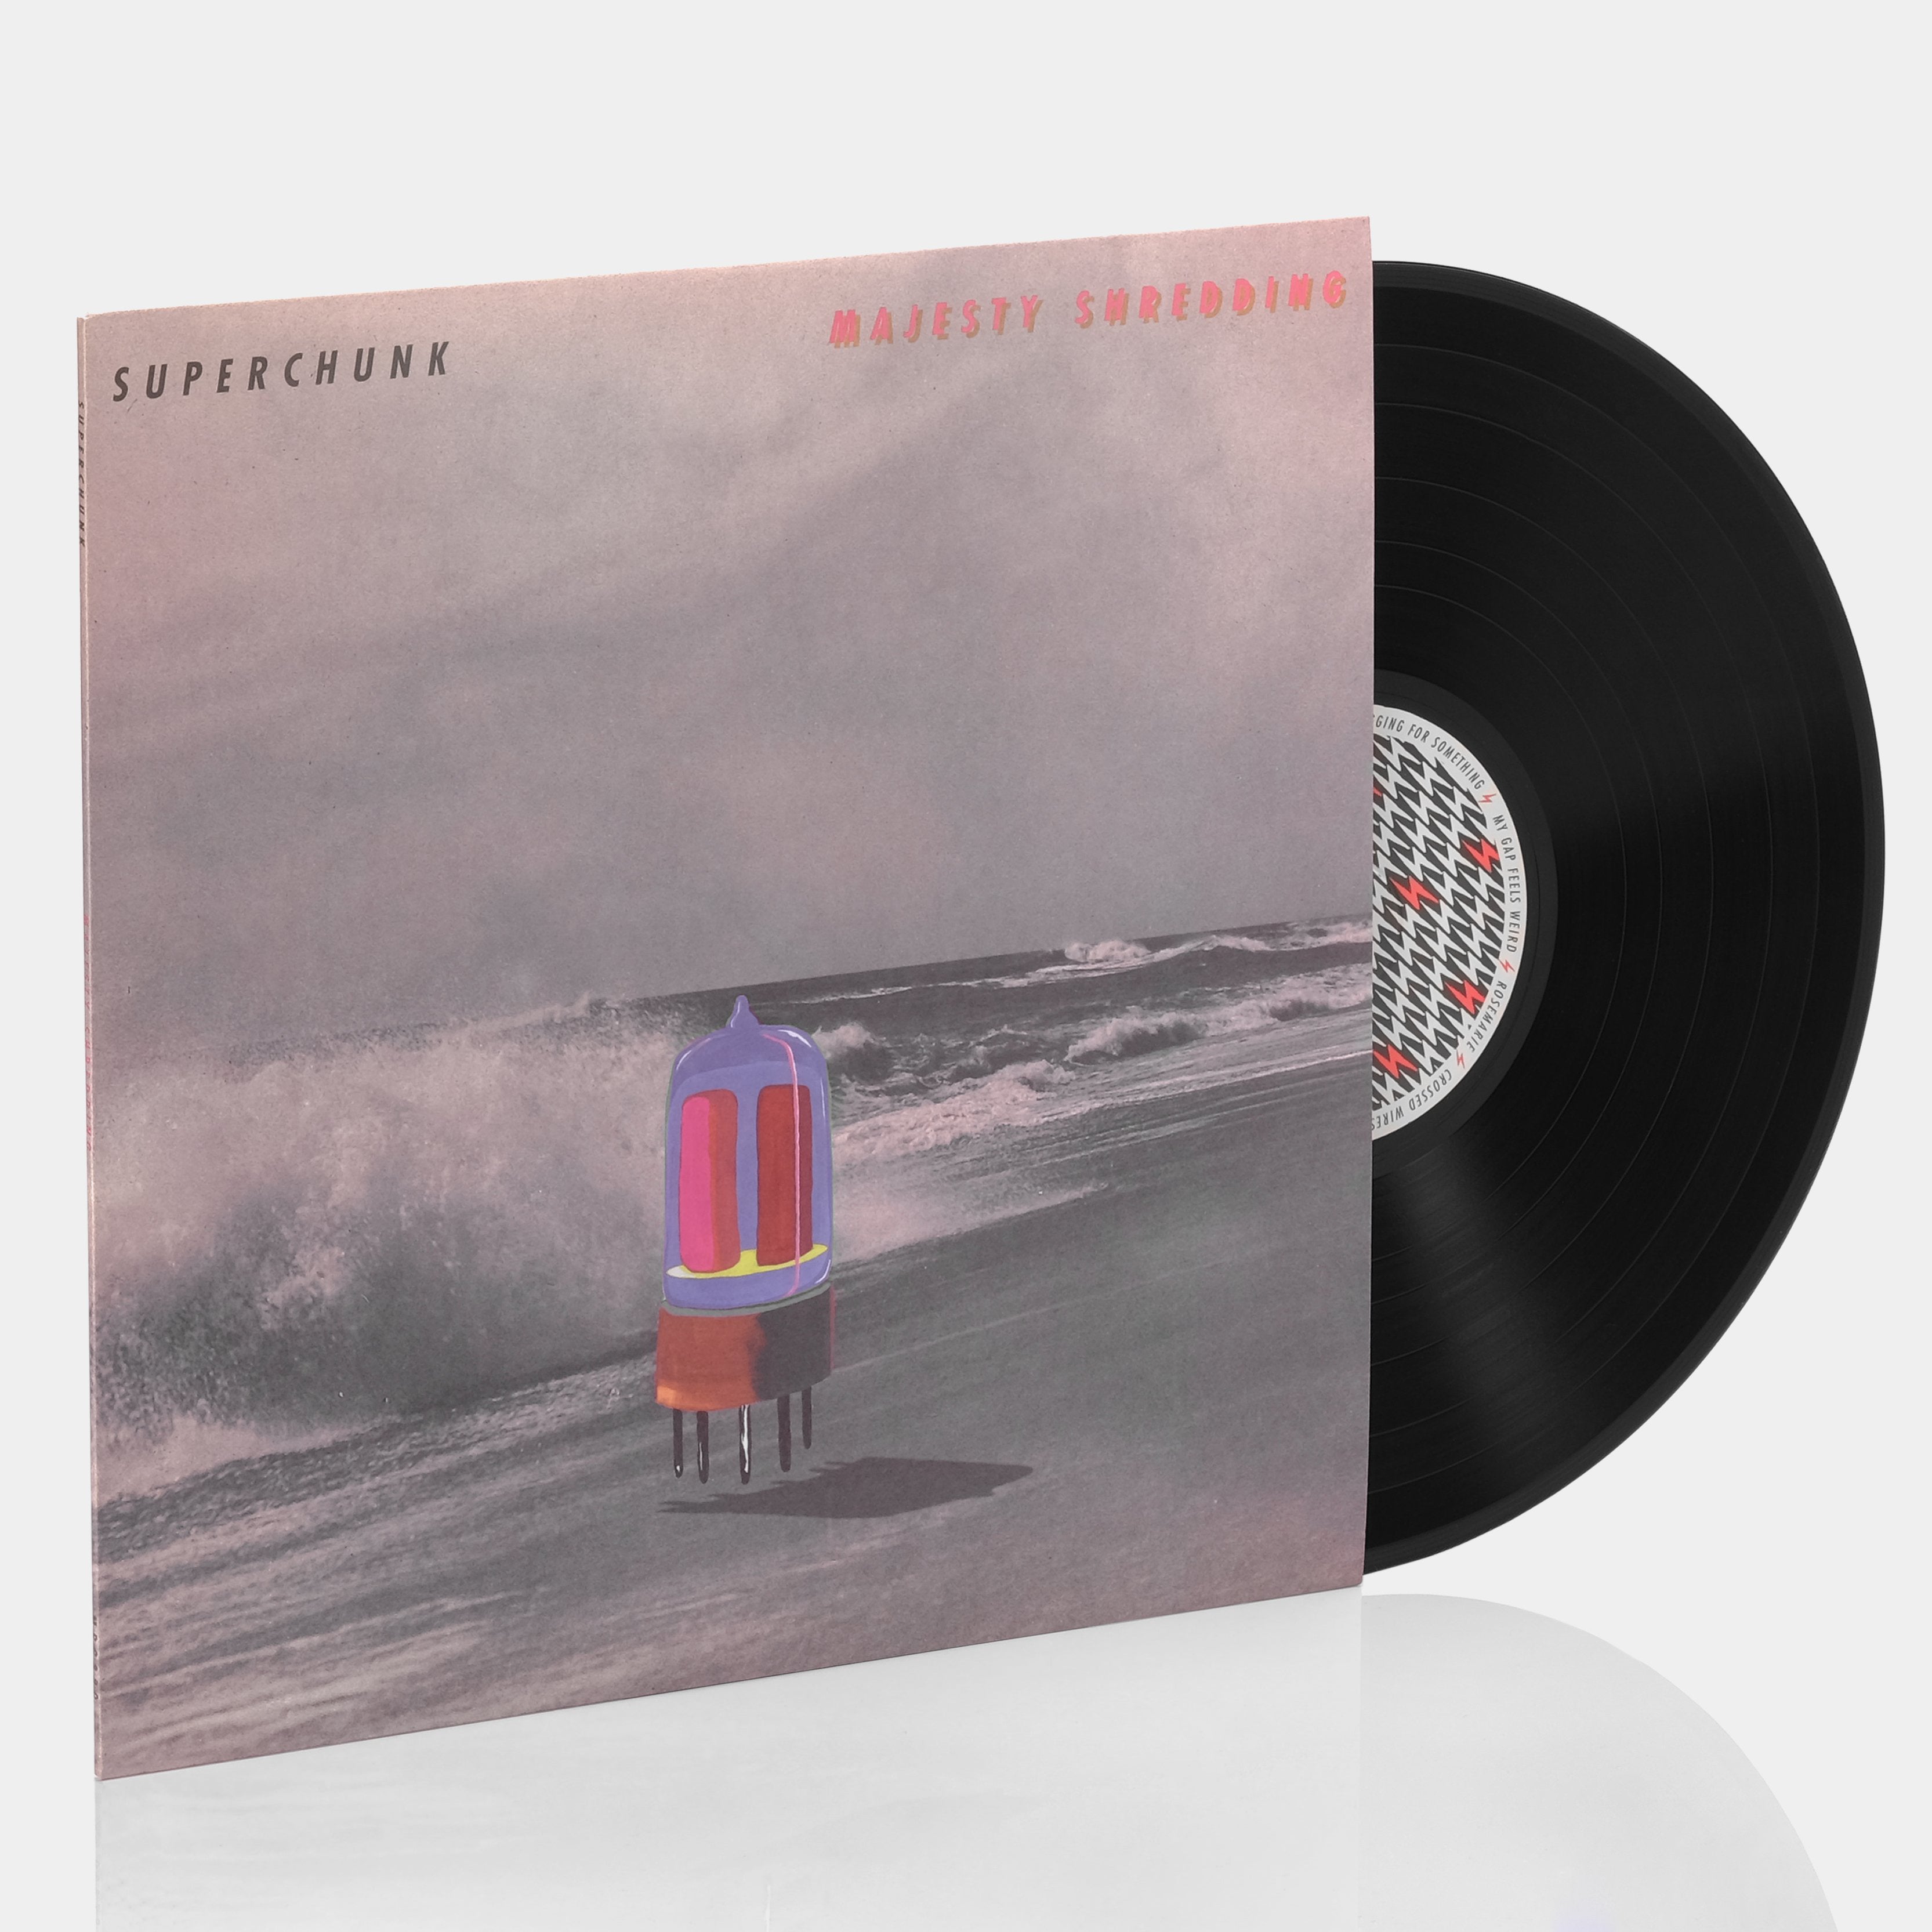 Superchunk - Majesty Shredding LP Vinyl Record